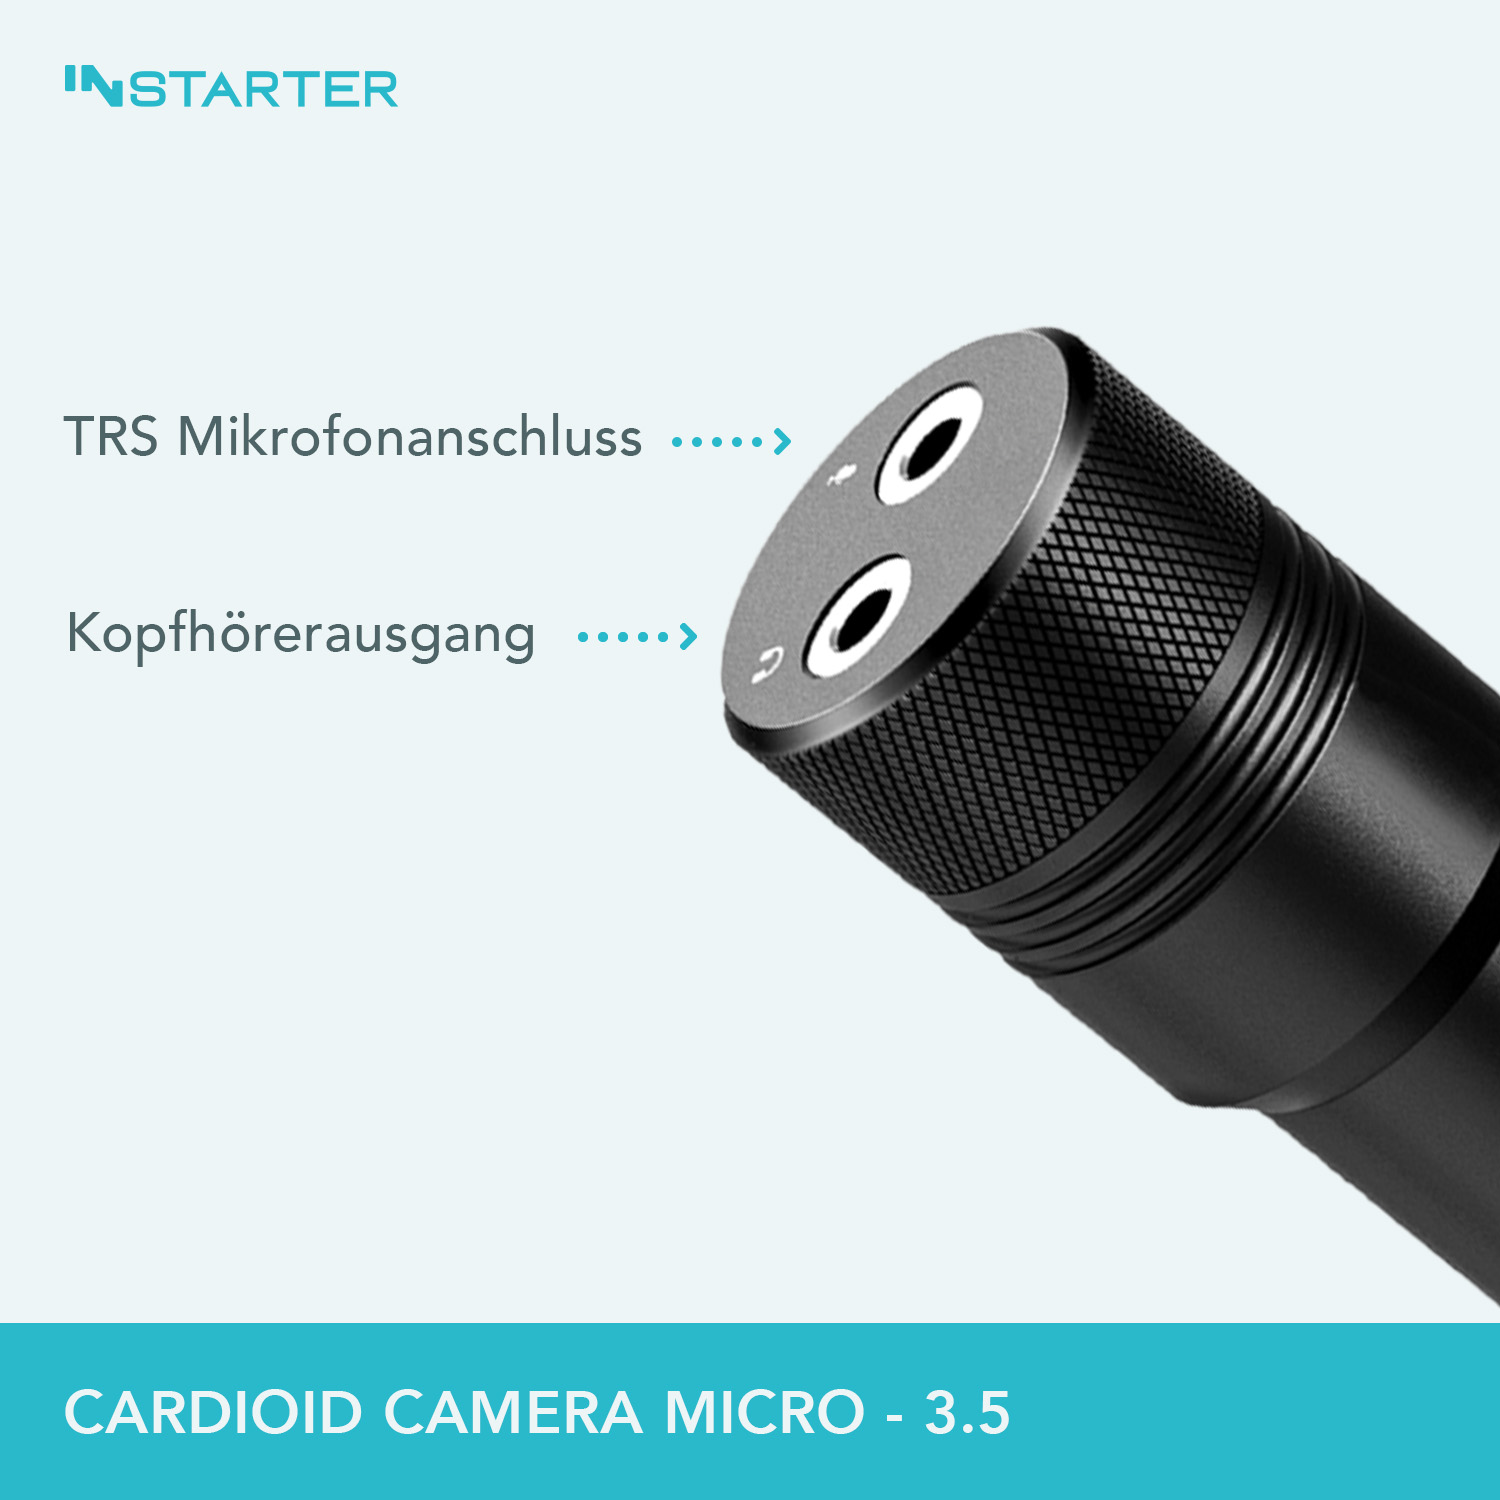 INStarter Cardioid Camera Micro 3.5 Anschlüsse